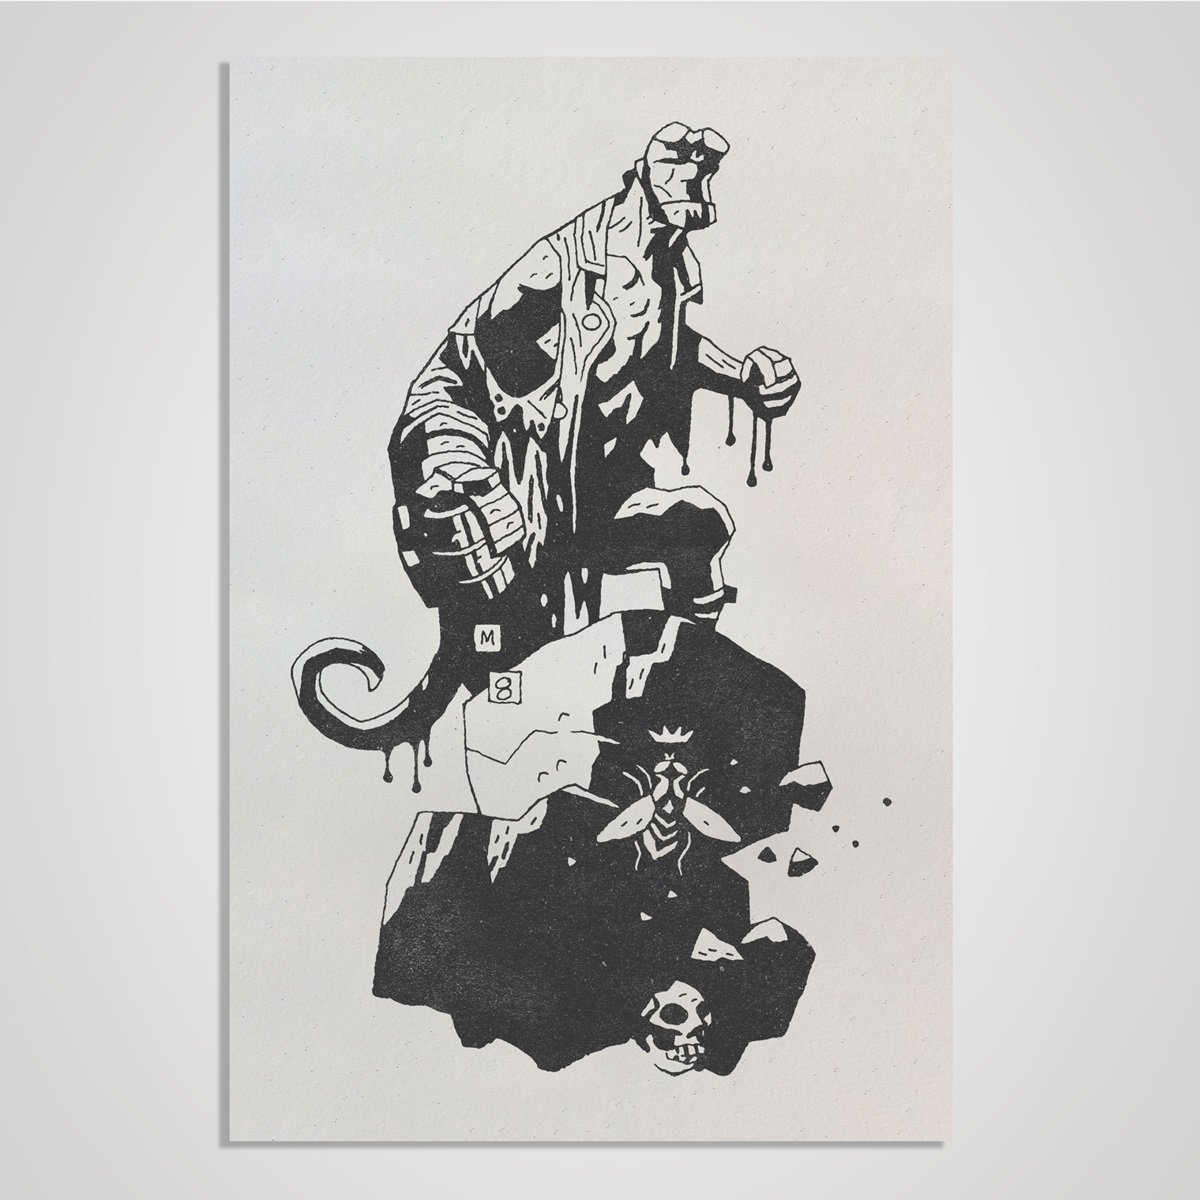 Hellboy Letterpress image from artist Mike Mignola.